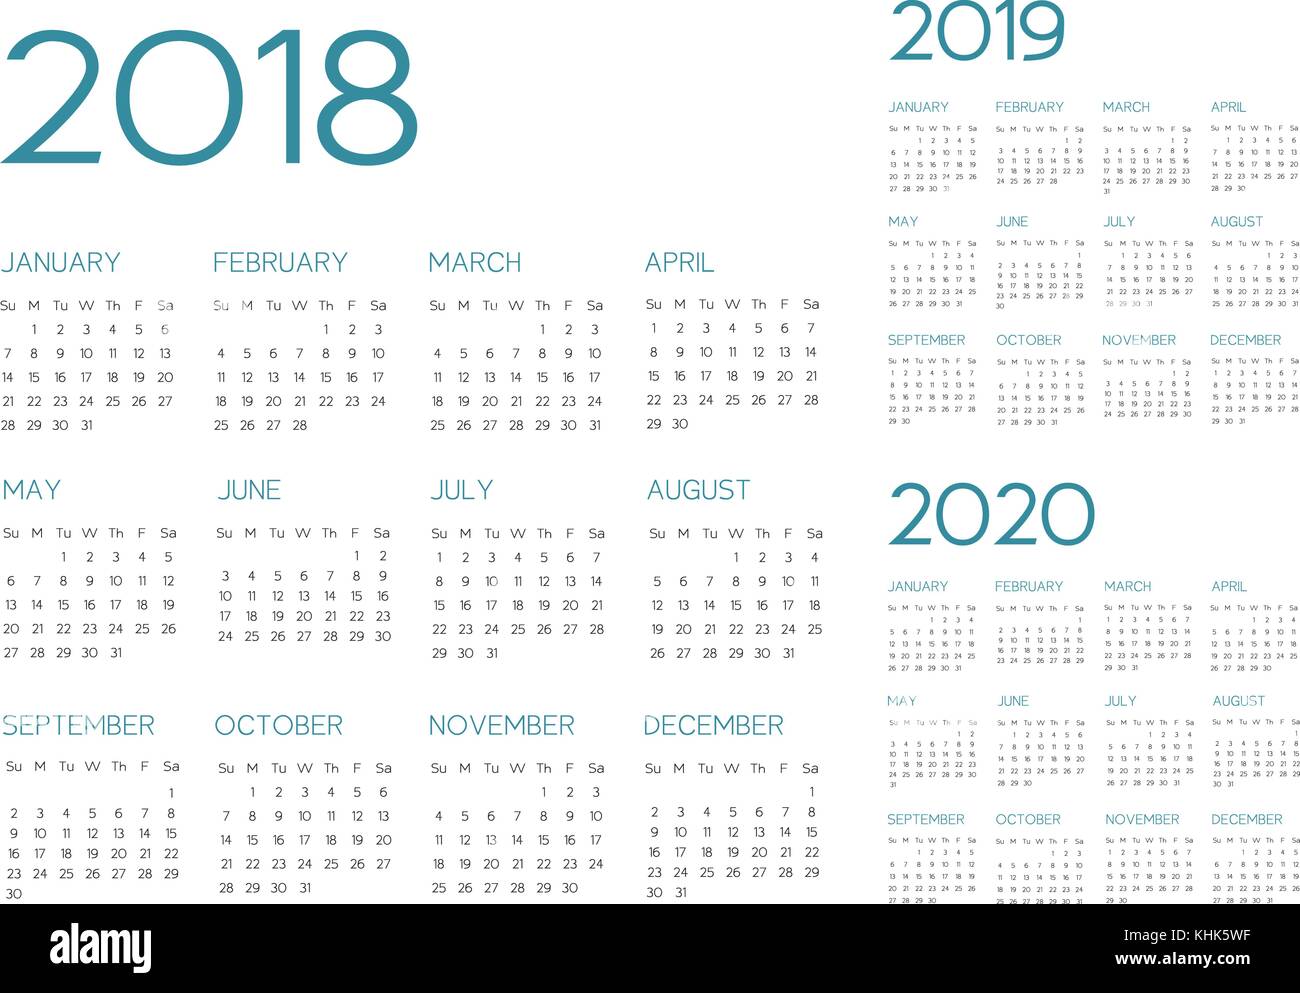 Simple 2020 Year Calendar Stock Photos & Simple 2020 Year Calendar Stock Images - Alamy1300 x 993